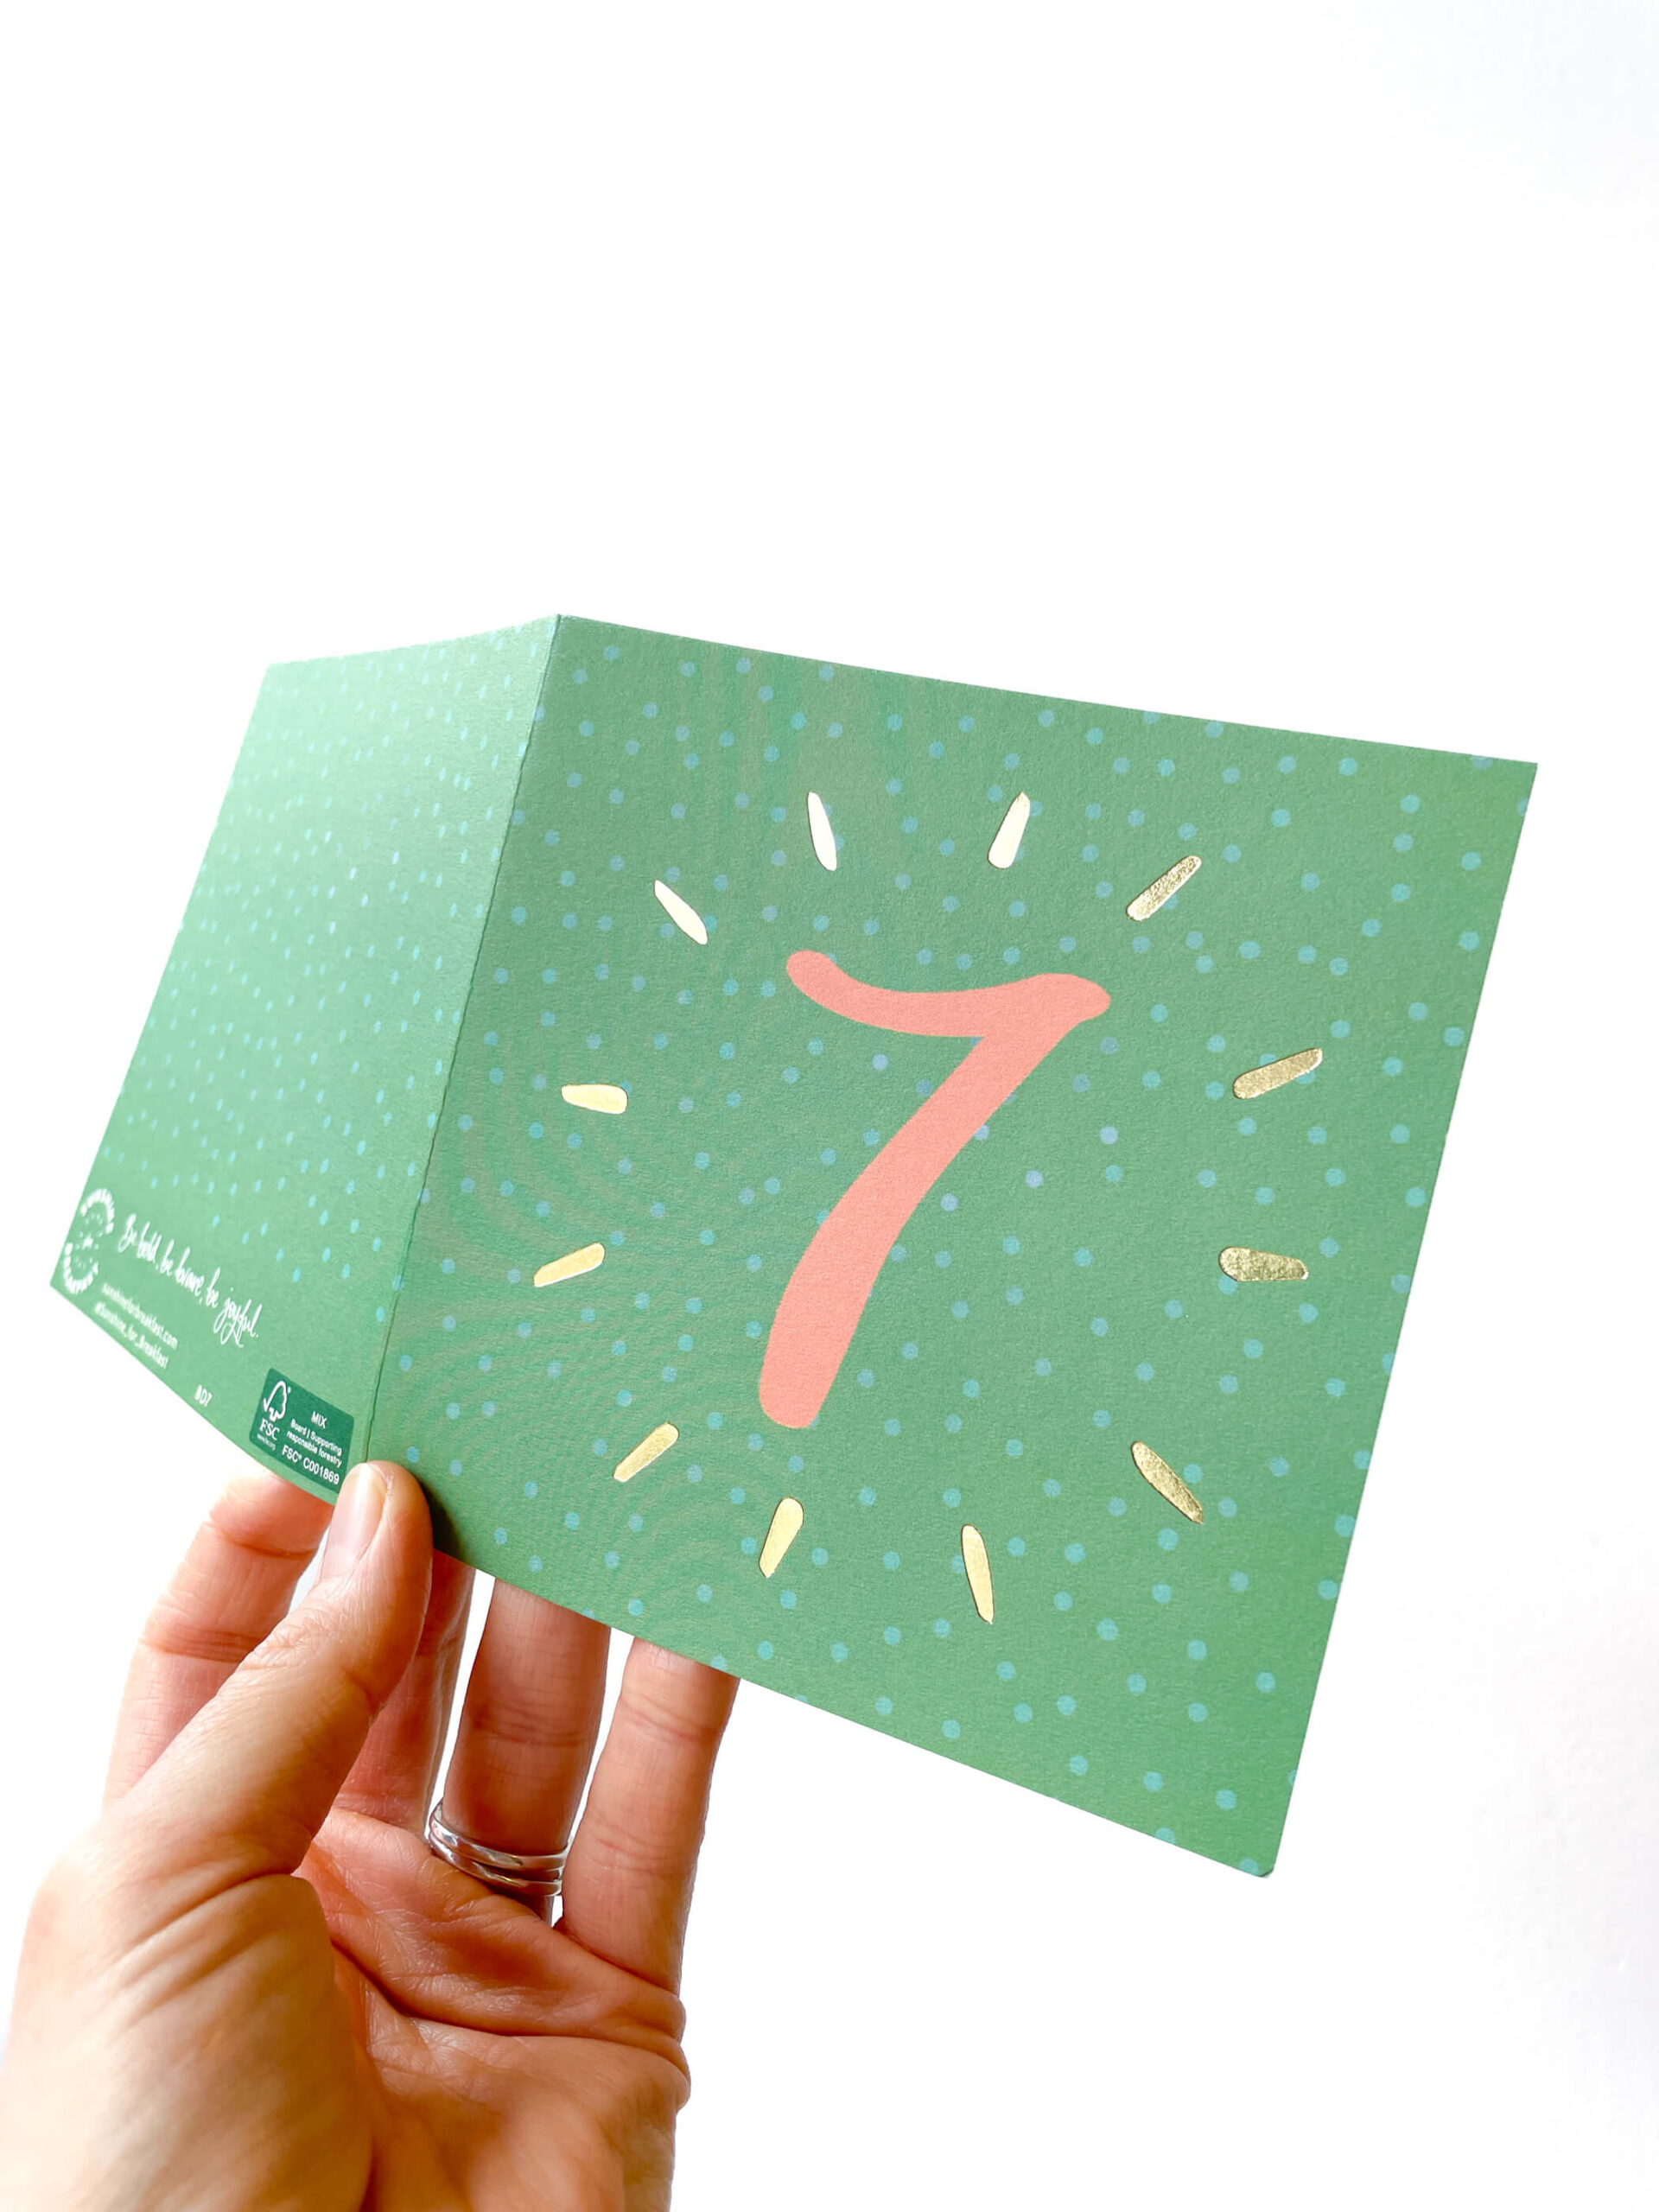 7th birthday card in green and orange spotty design